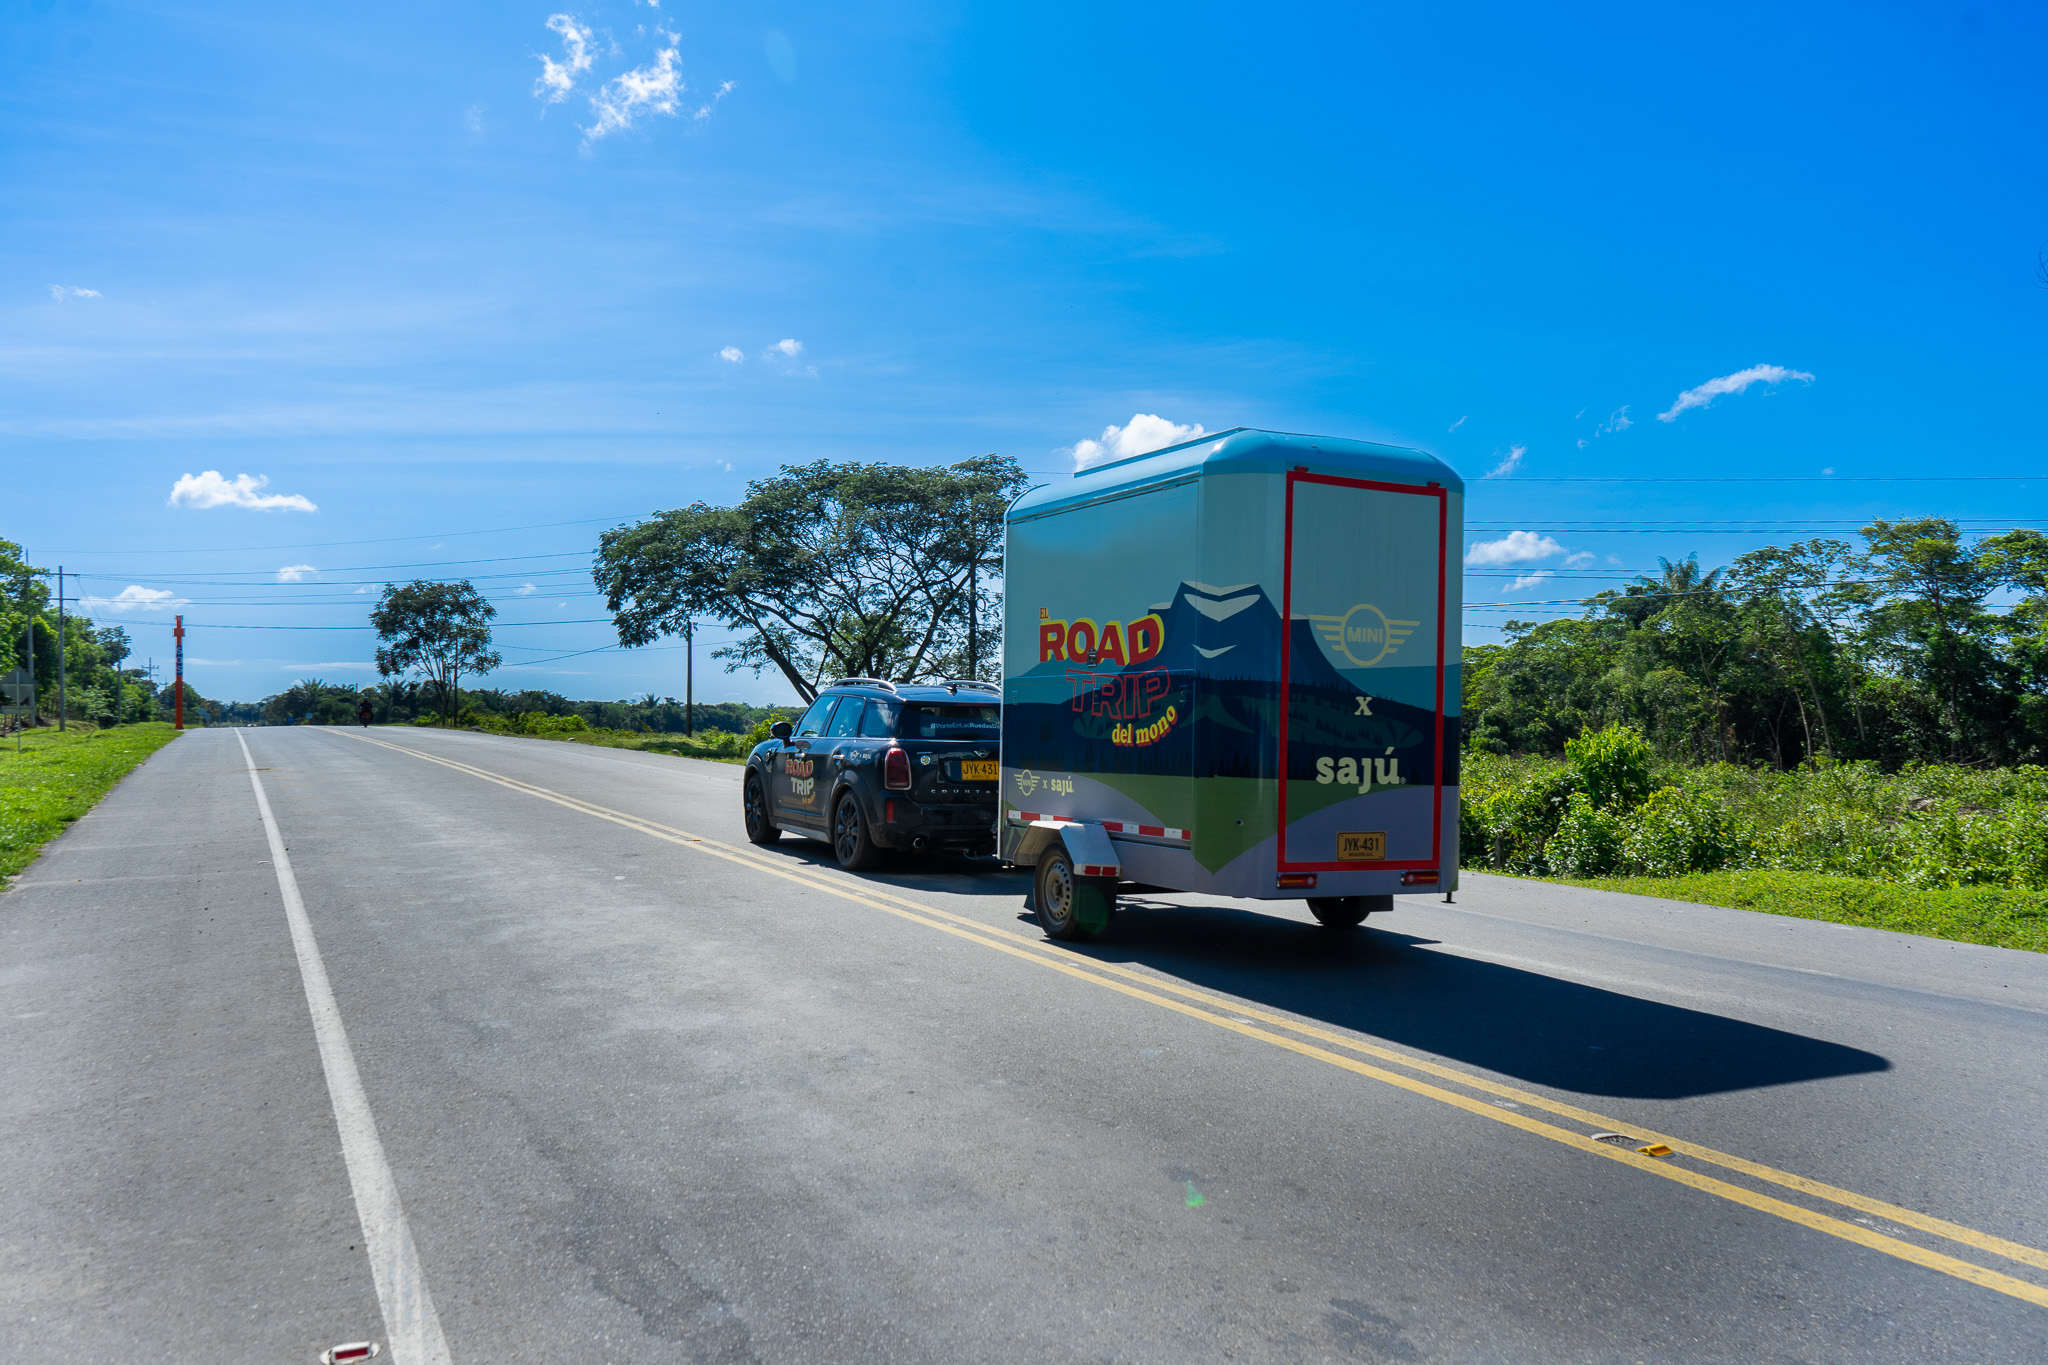 Roadtrip del Mono 3.0 llega al caribe